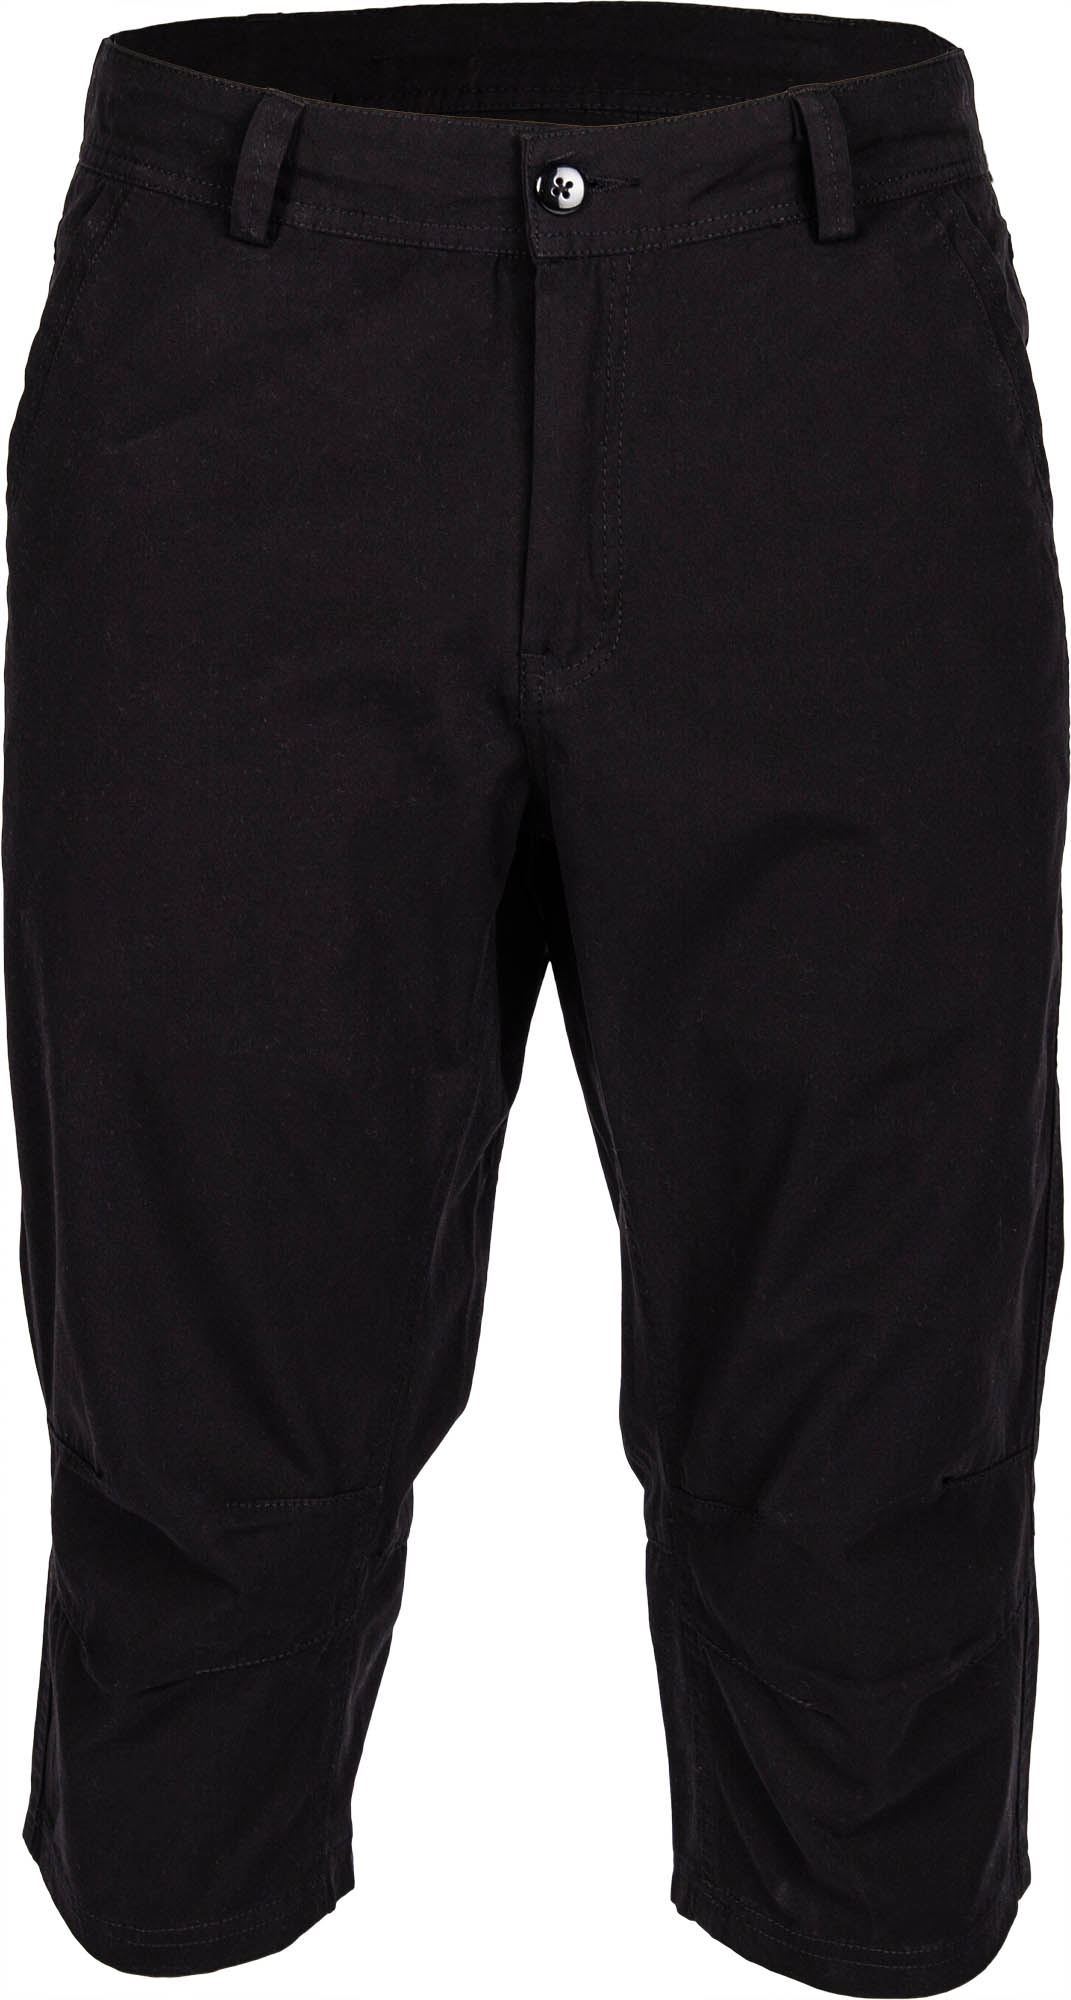 Men’s 3/4 length pants